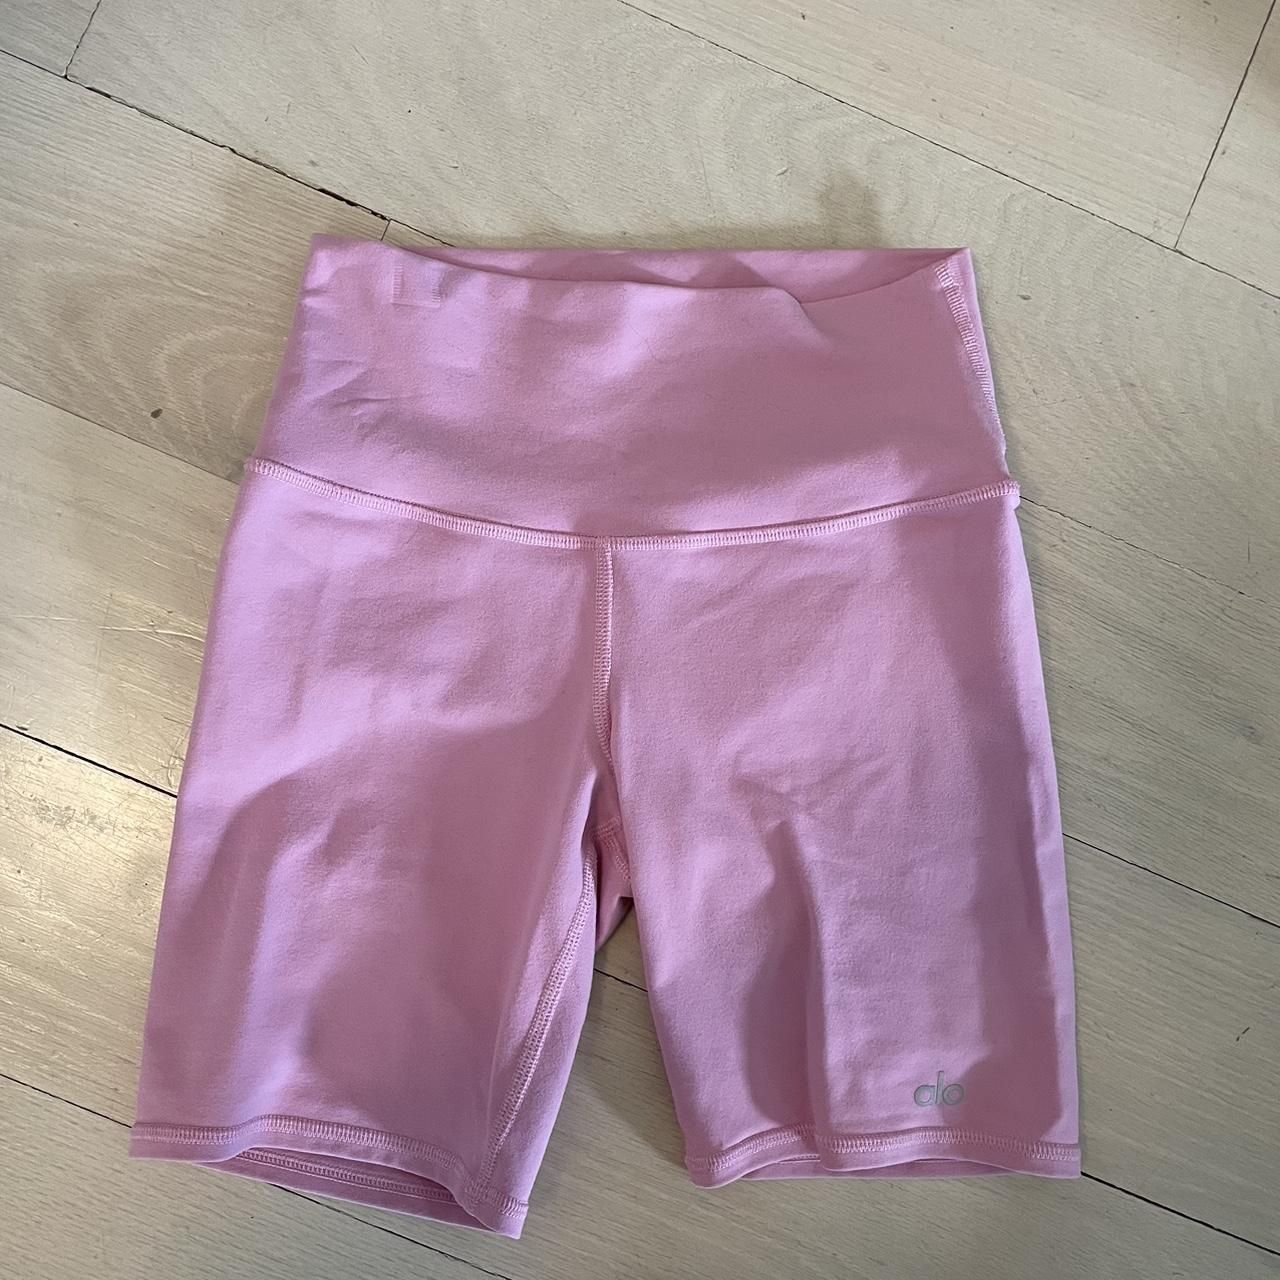 Aurola intensify workout shorts Pink - Depop